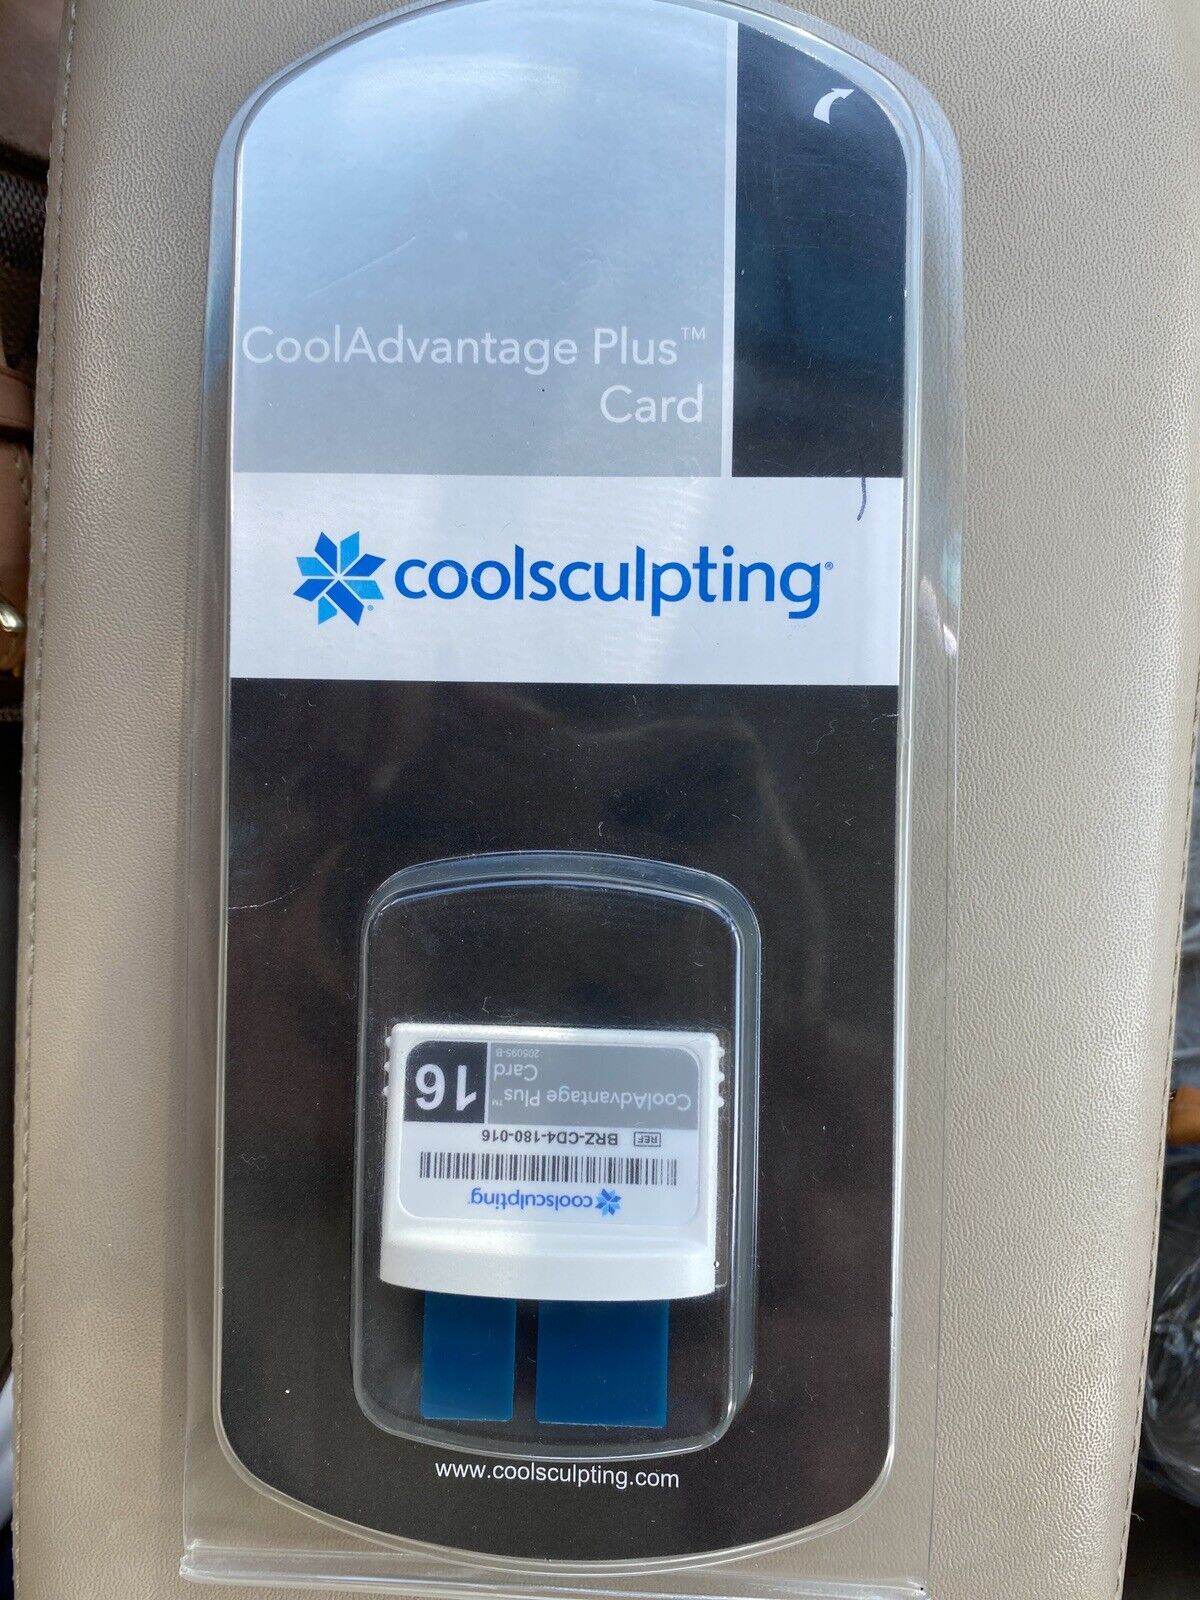 Cooladvantage Plus Used Cycle Card 0/16